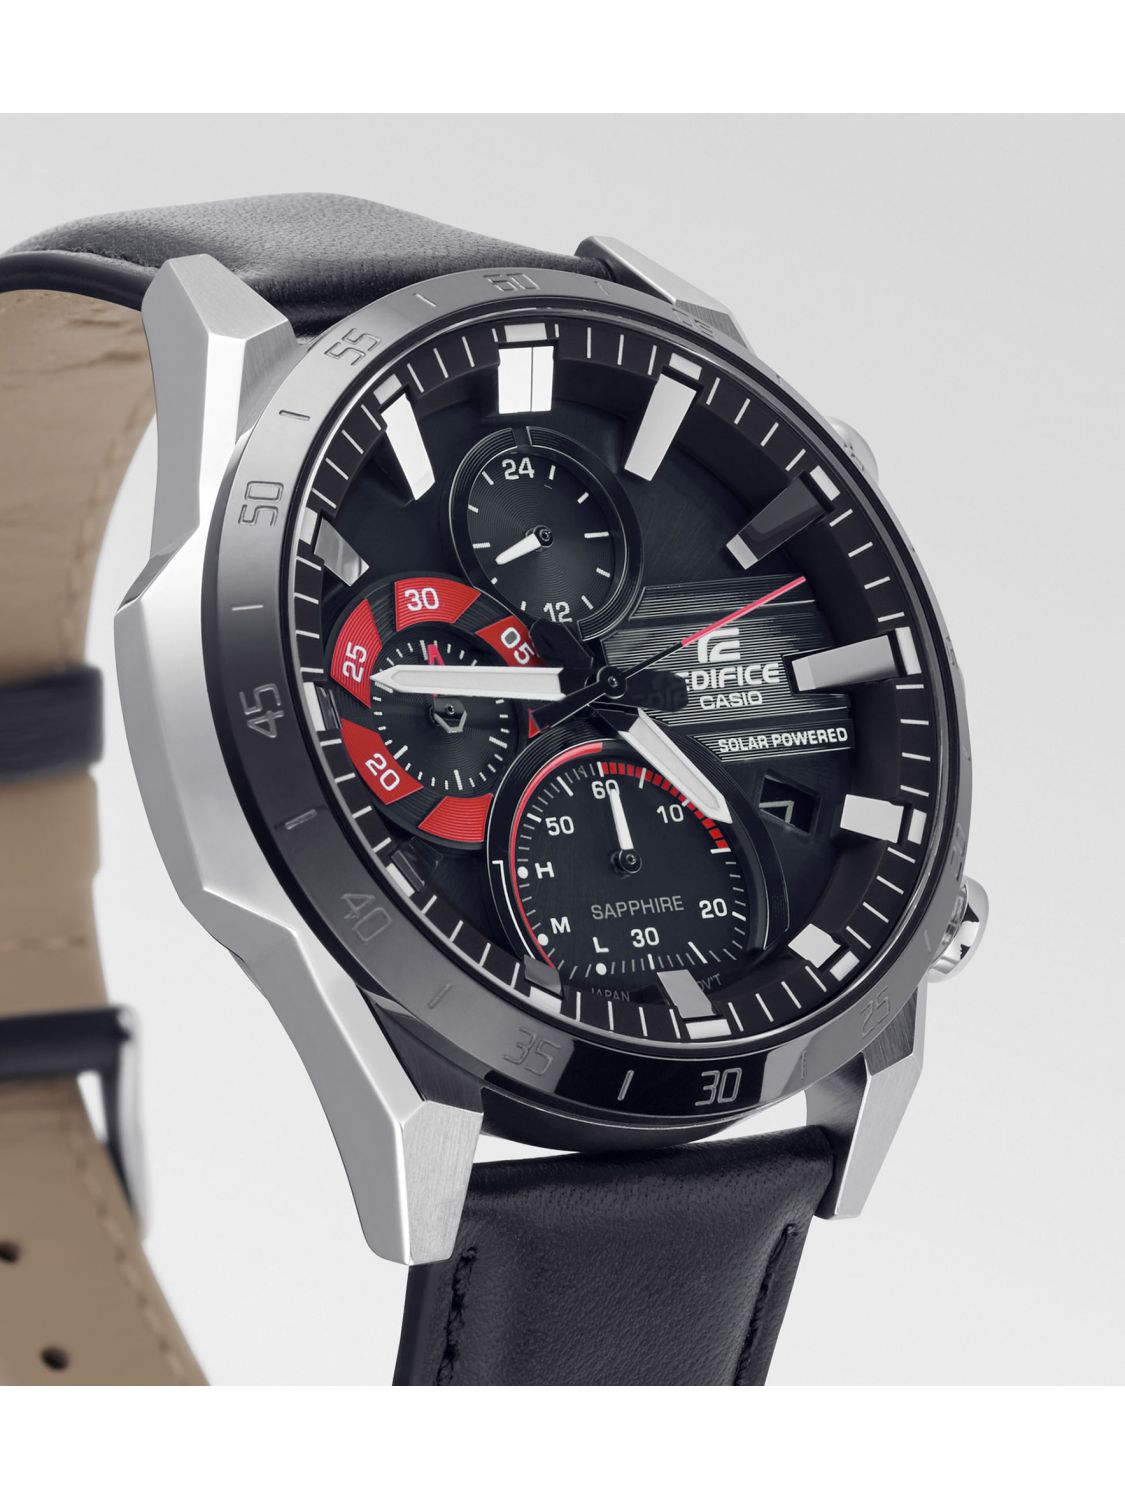 Casio Edifice Men's Watch Solar Black/Red EFS-S620BL-1AVUEF • uhrcenter